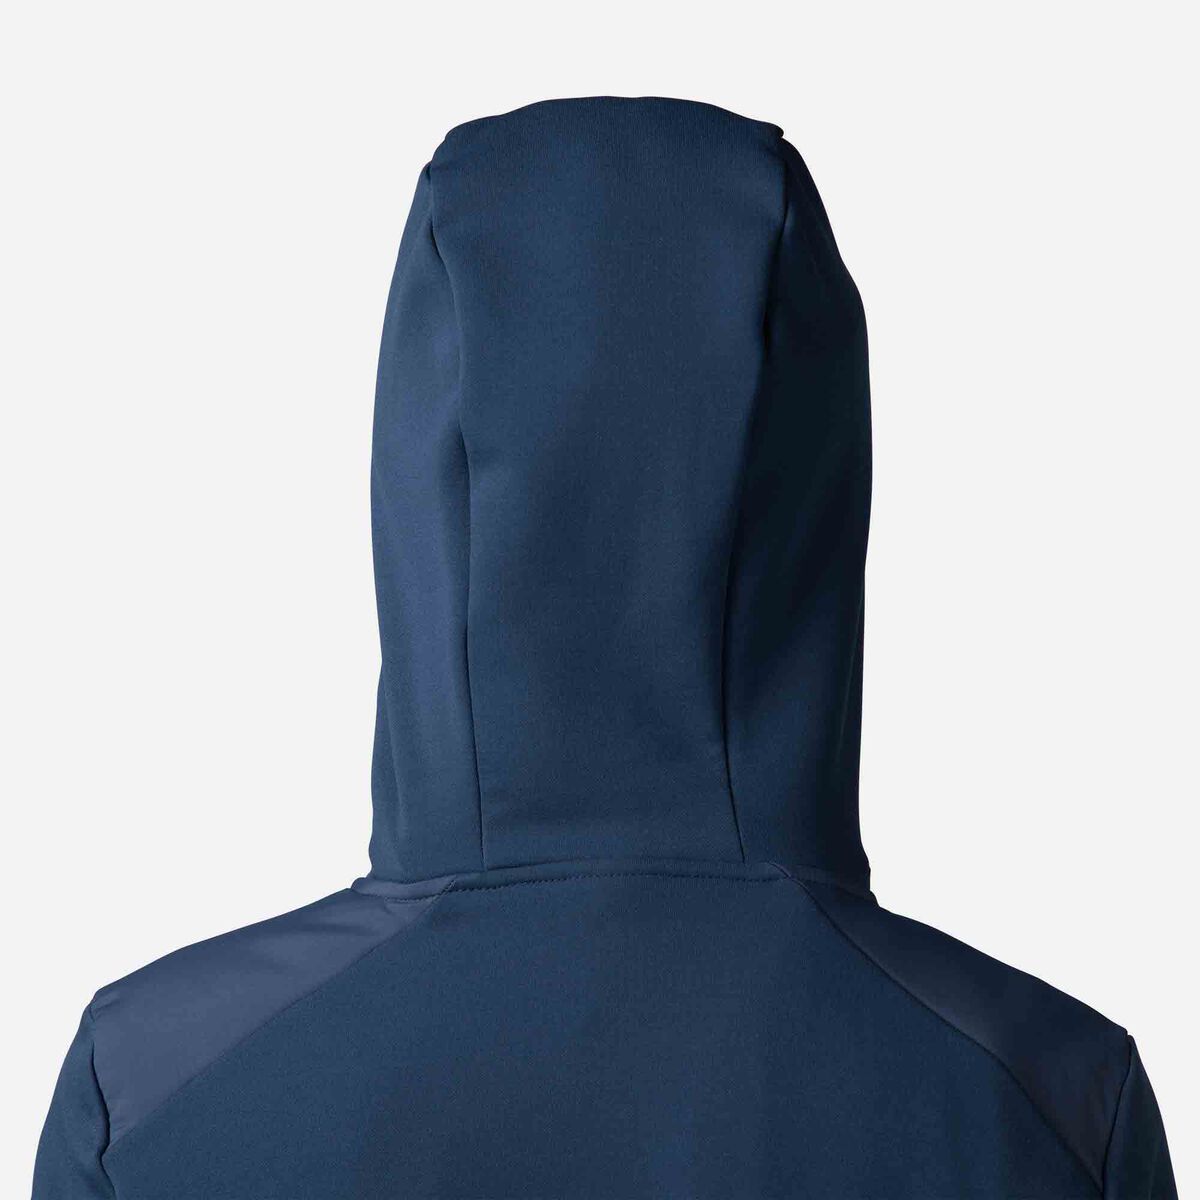 Rossignol Women's Classique Hybrid Jacket blue